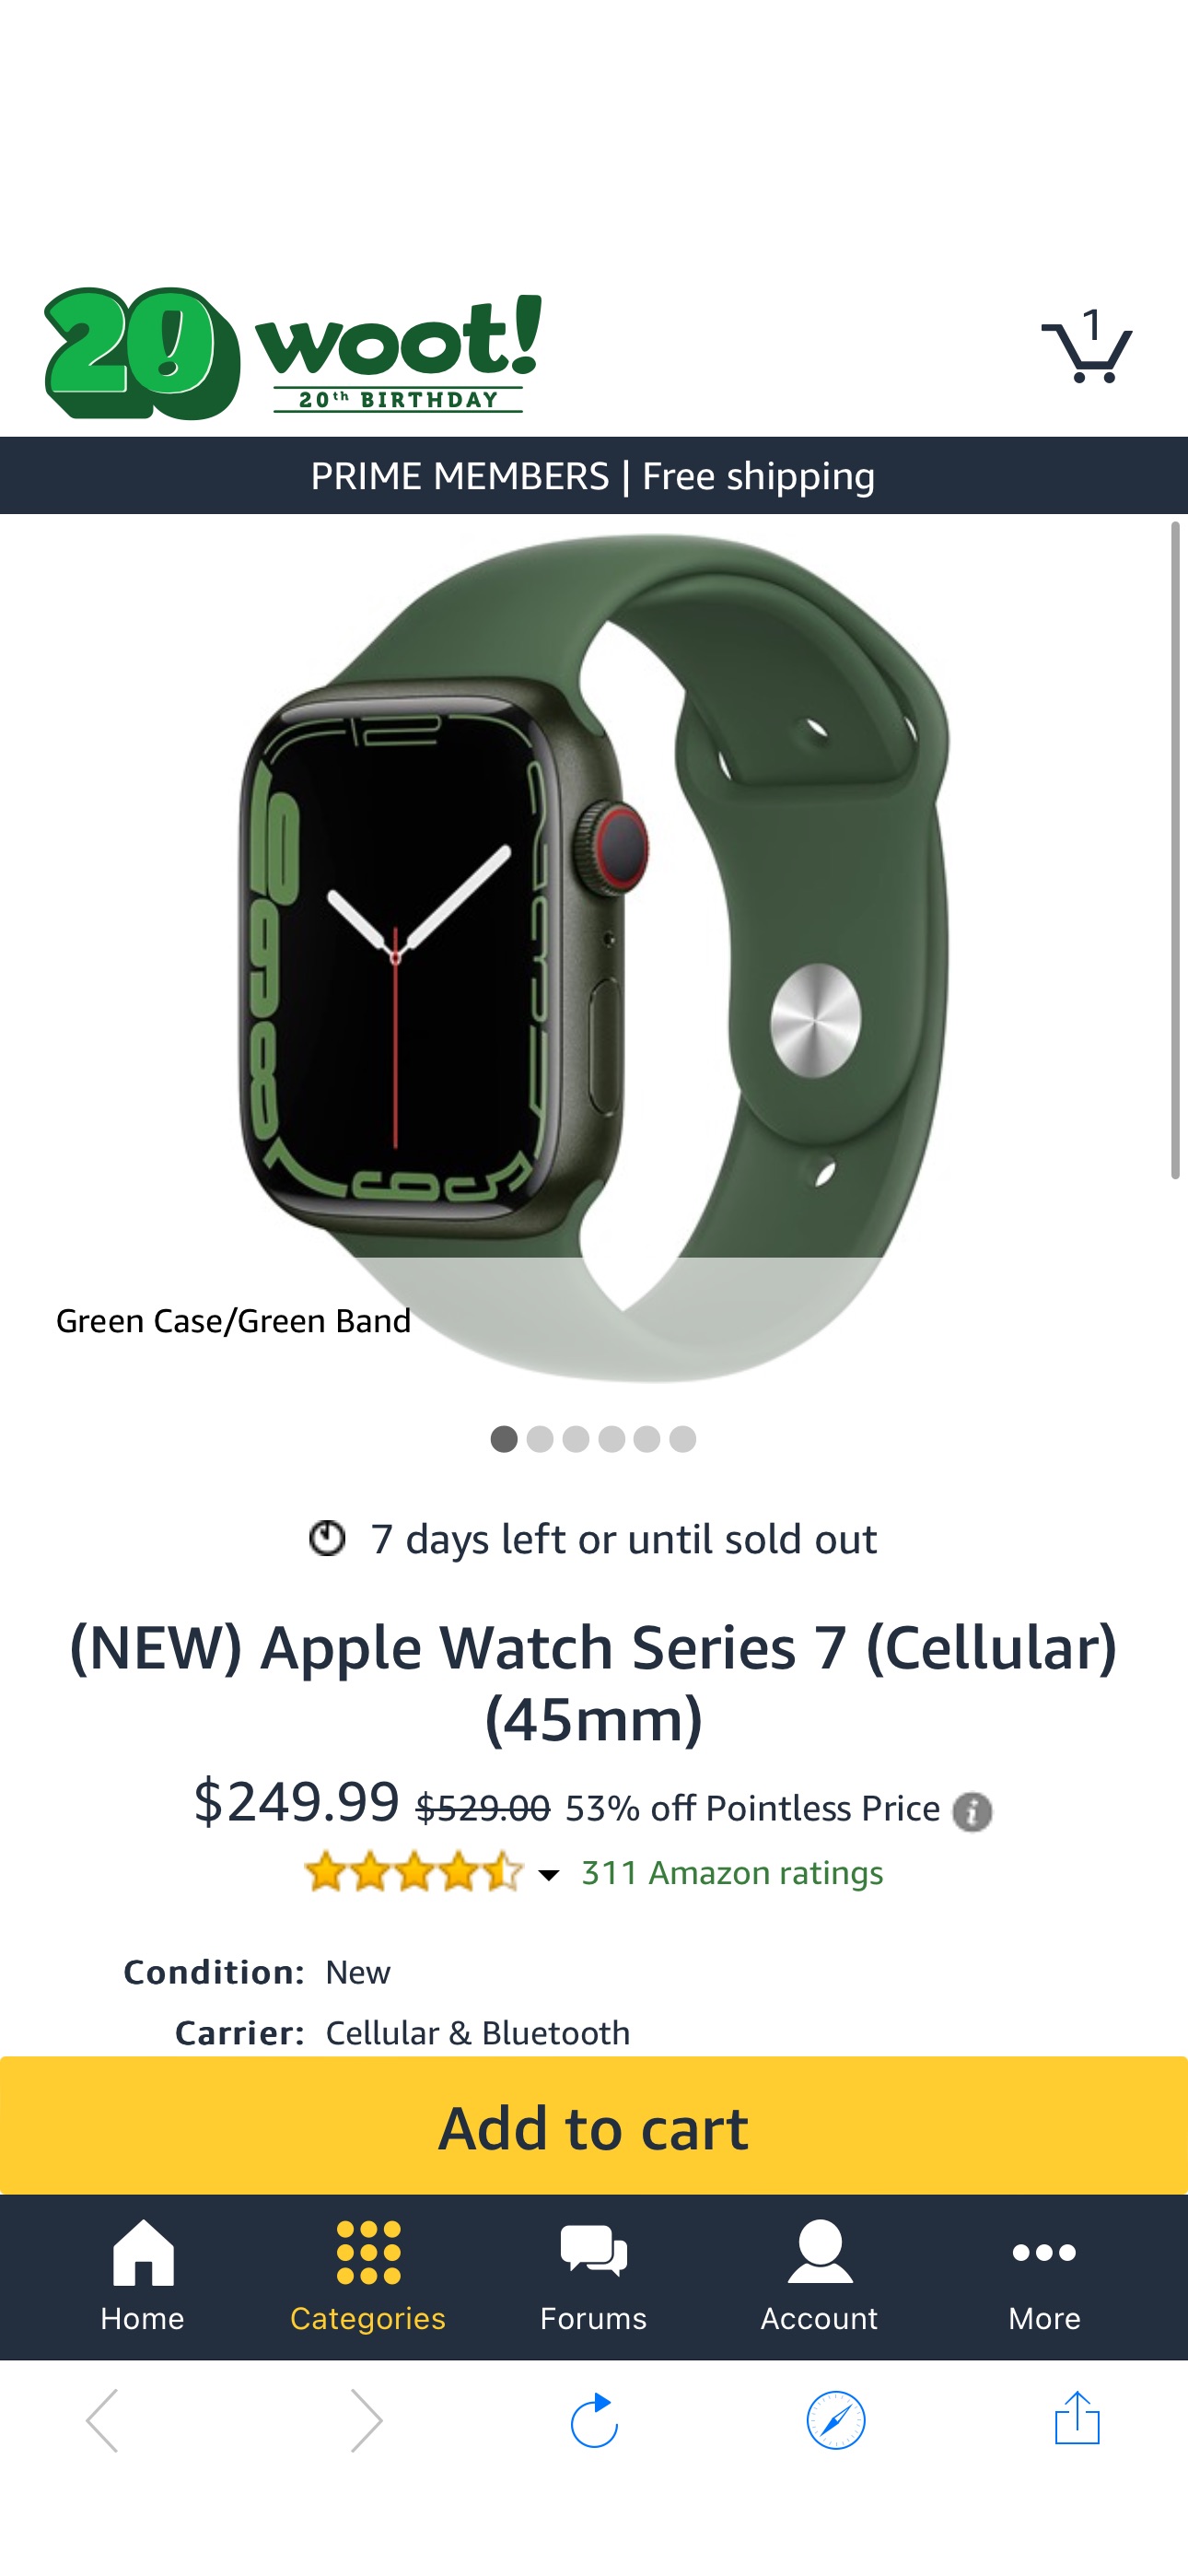 (NEW) Apple Watch Series 7 (Cellular) (45mm)